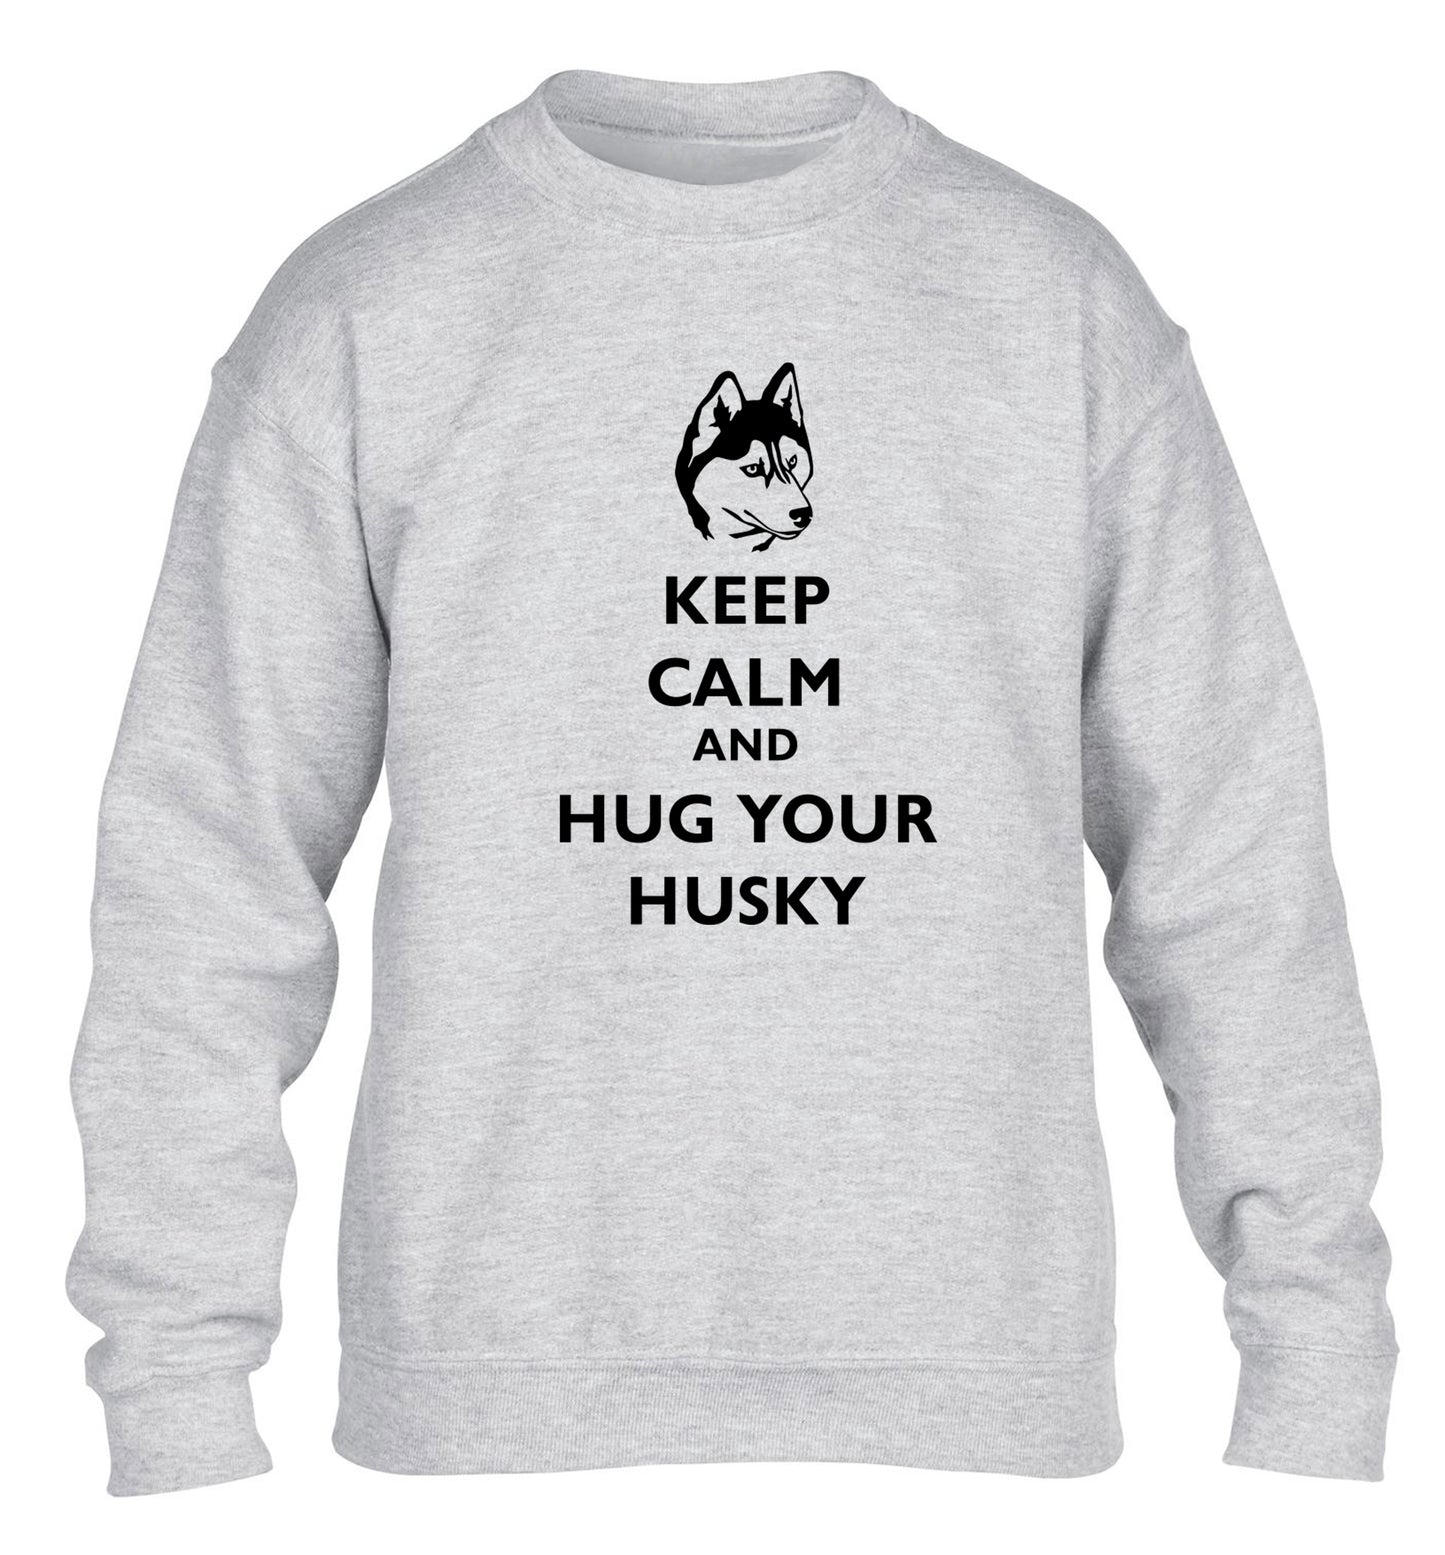 Keep calm and hug your husky children's grey sweater 12-13 Years